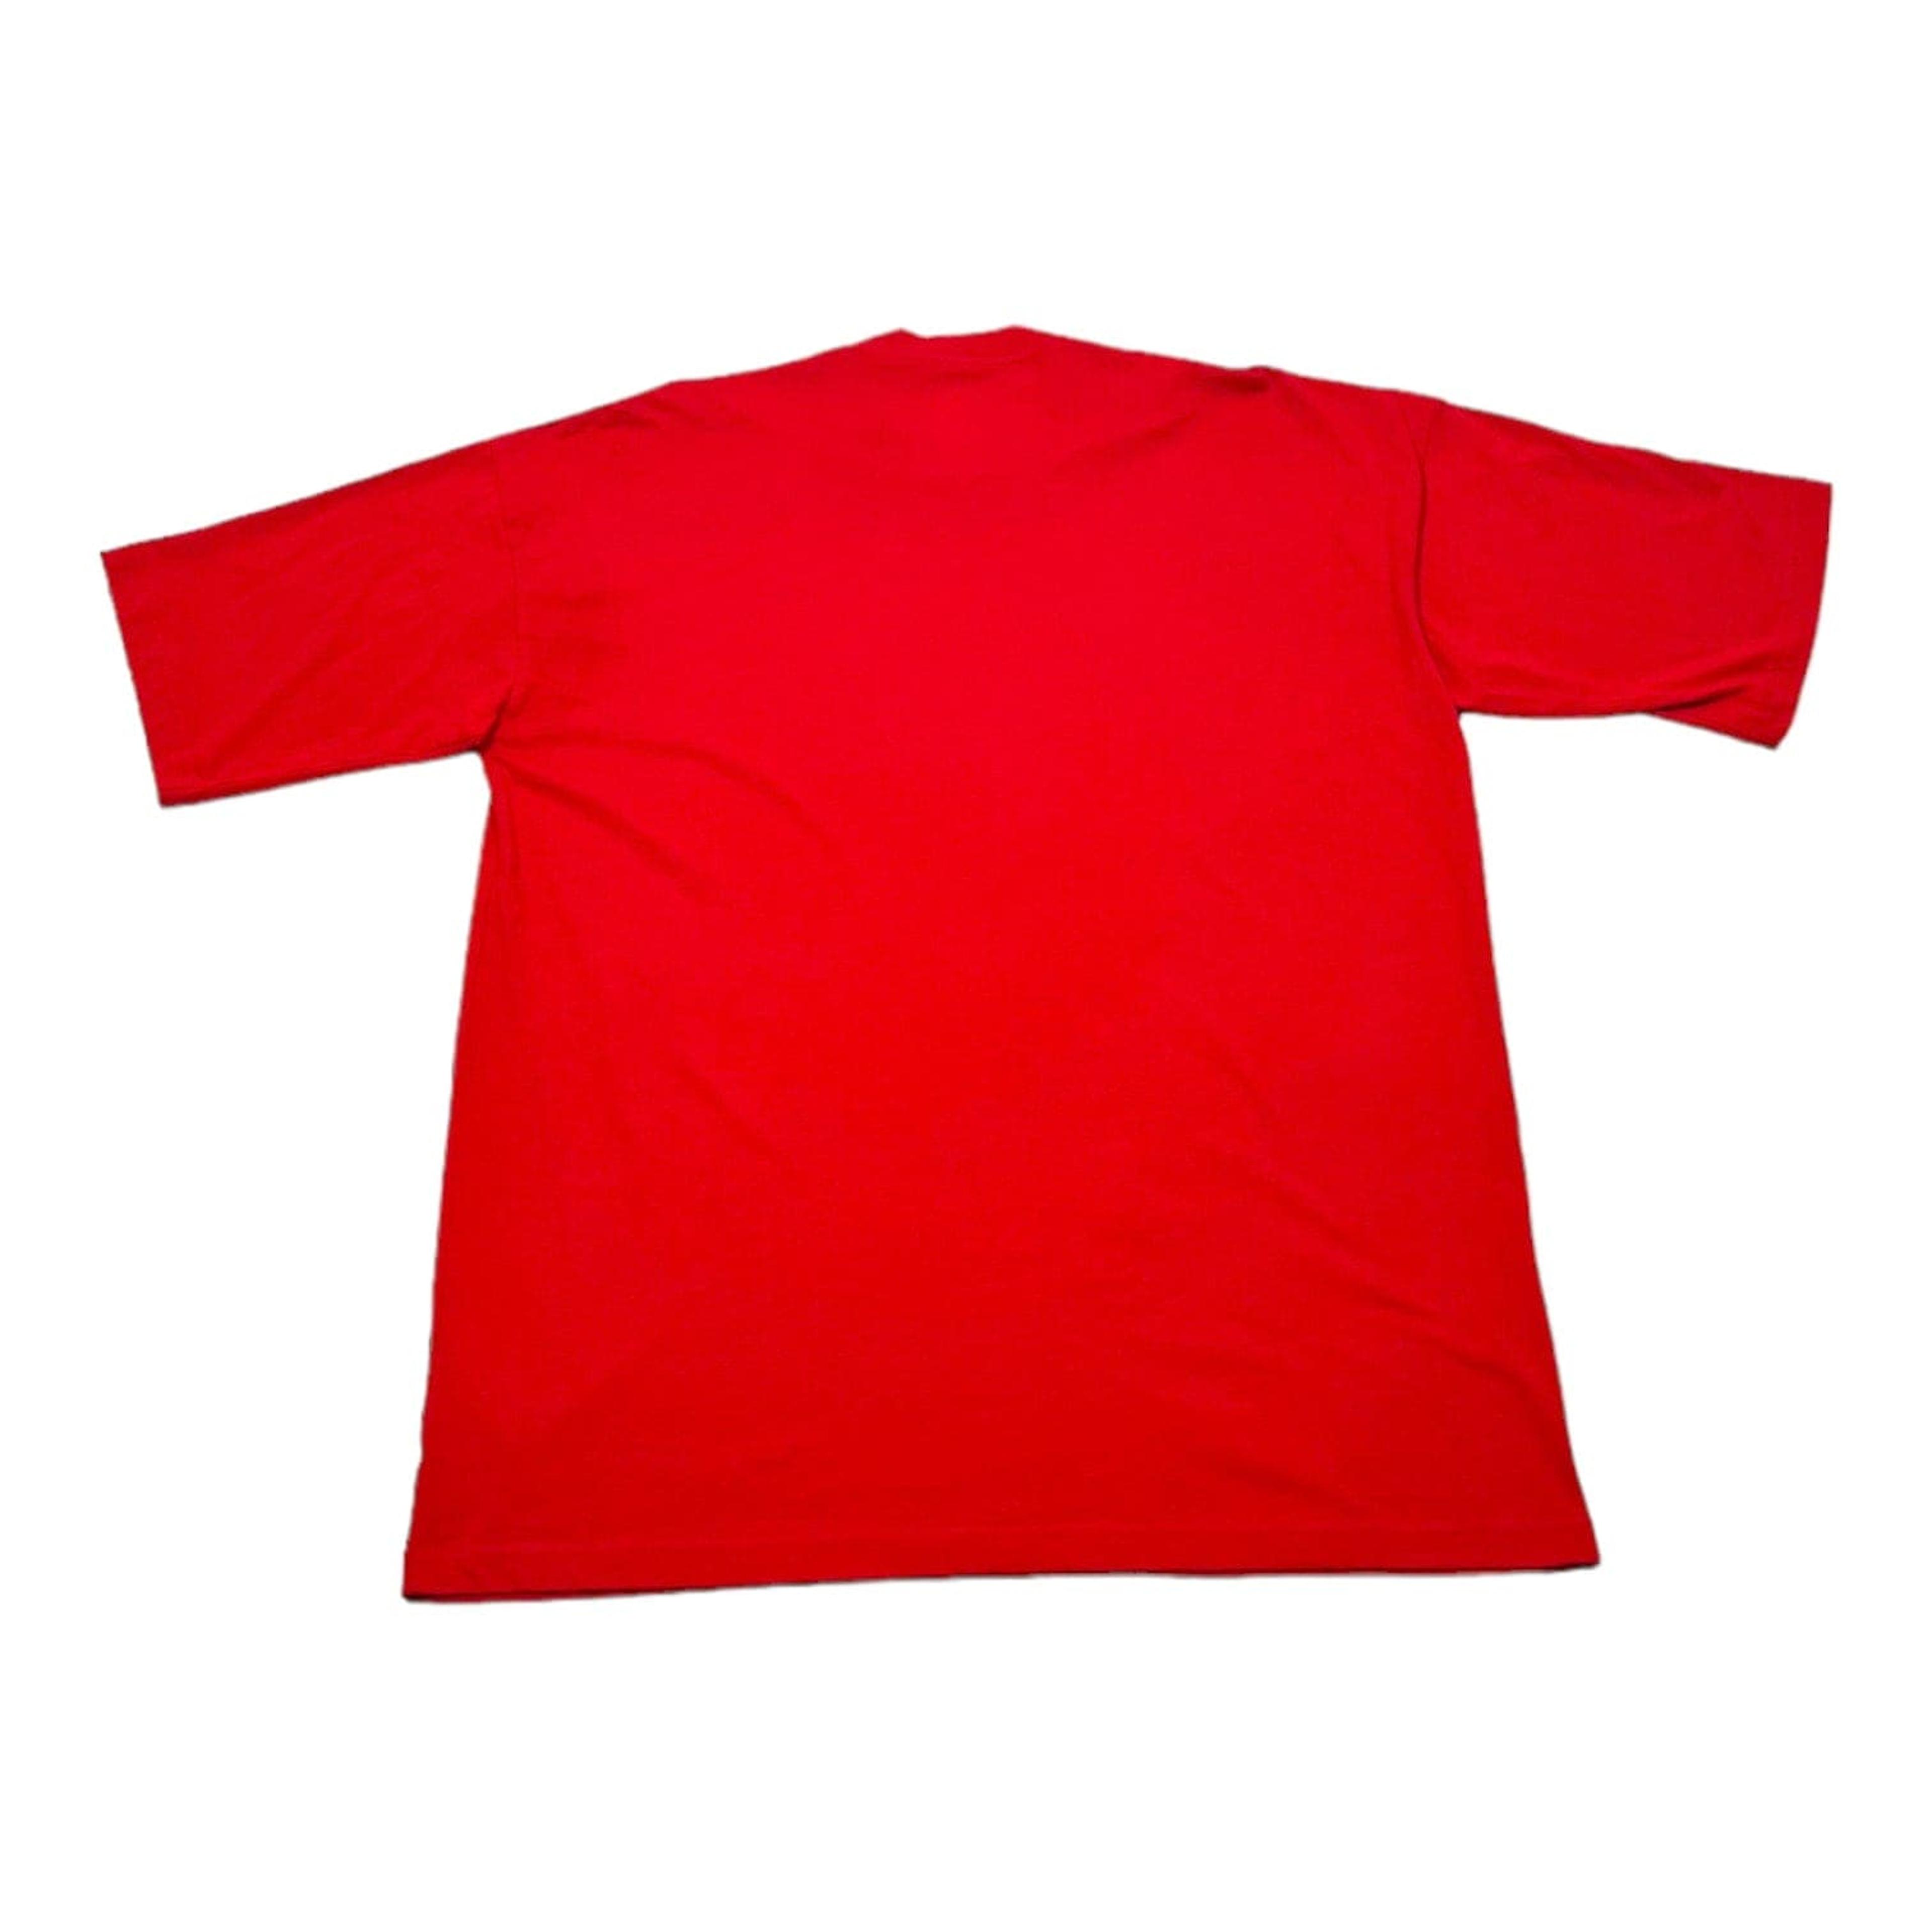 Alternate View 1 of Marni Scanned Logo Oversized Short Sleeve Tee Shirt Red